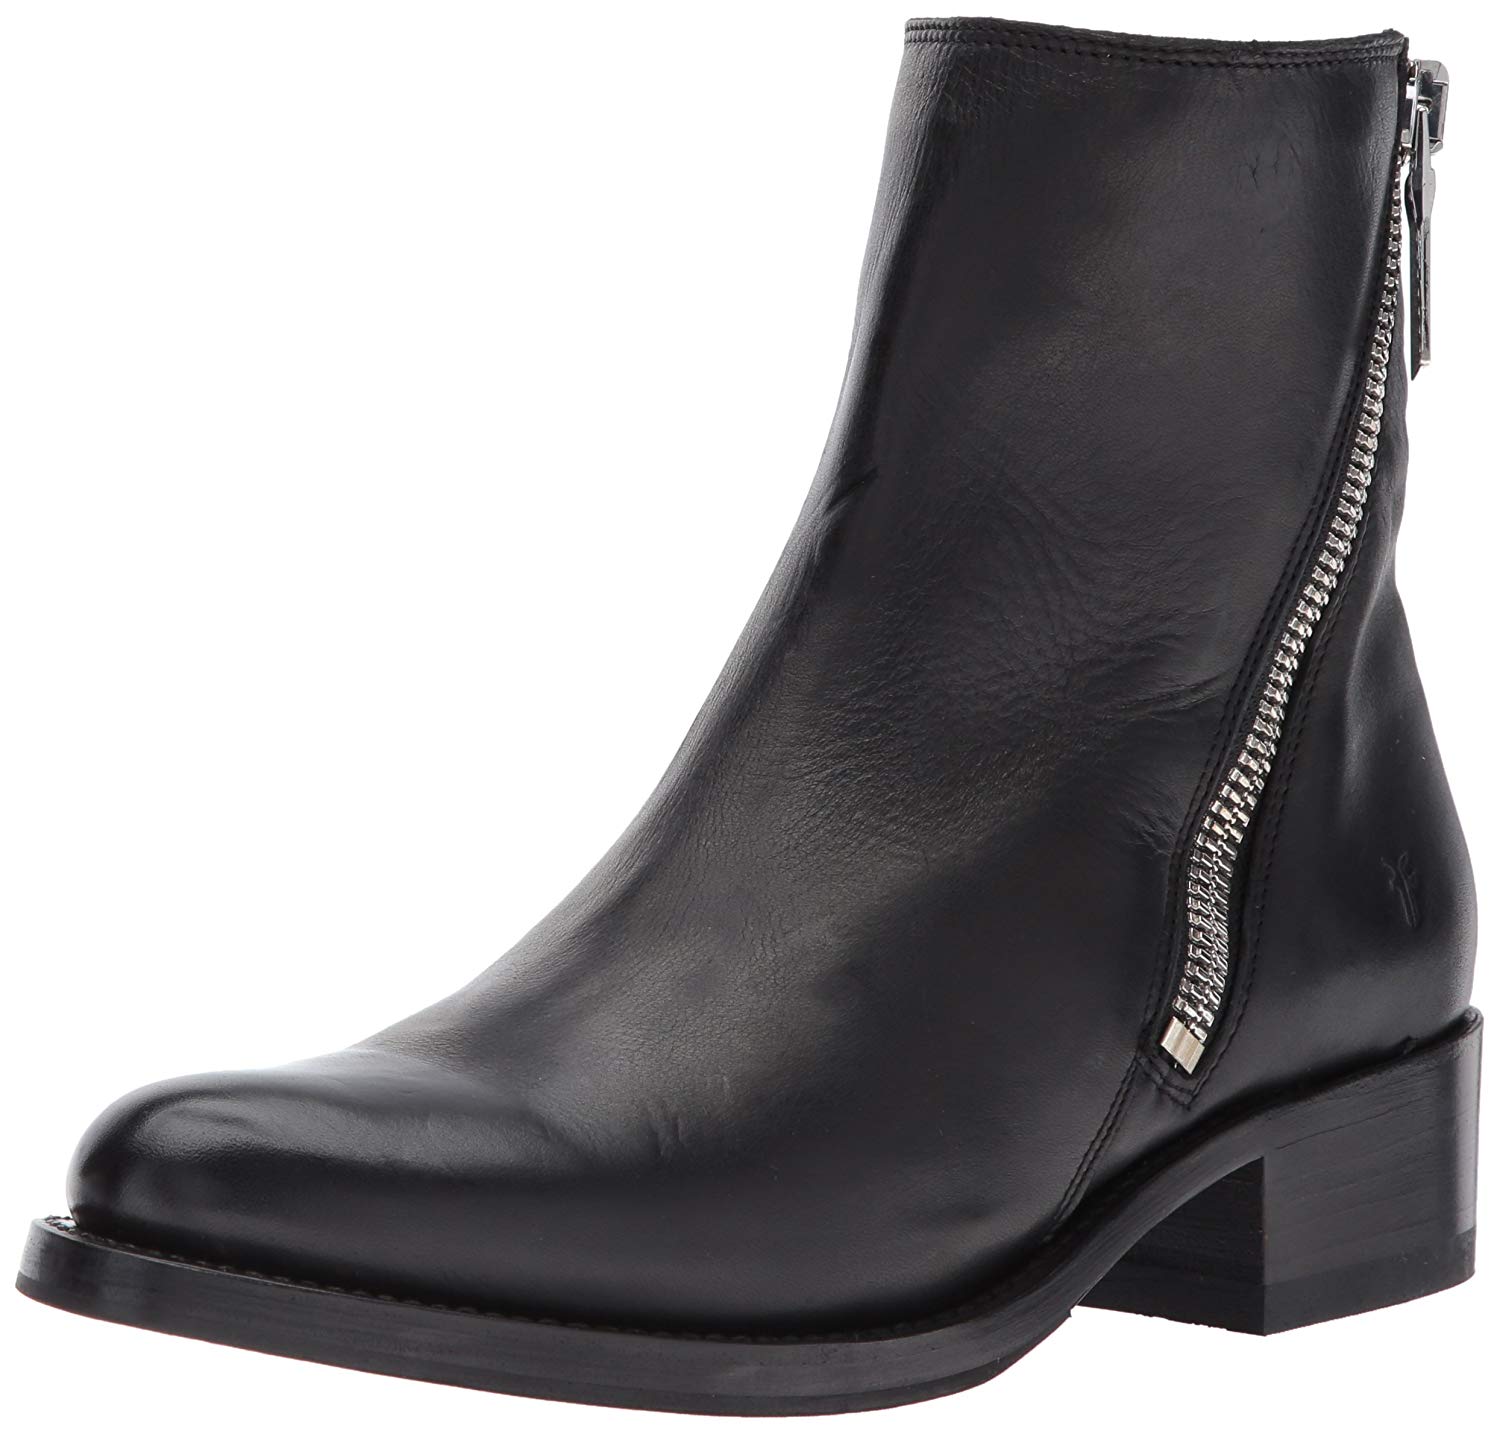 FRYE Women's Demi Zip Bootie Boot, Black, Size 5.5 MRE6 | eBay